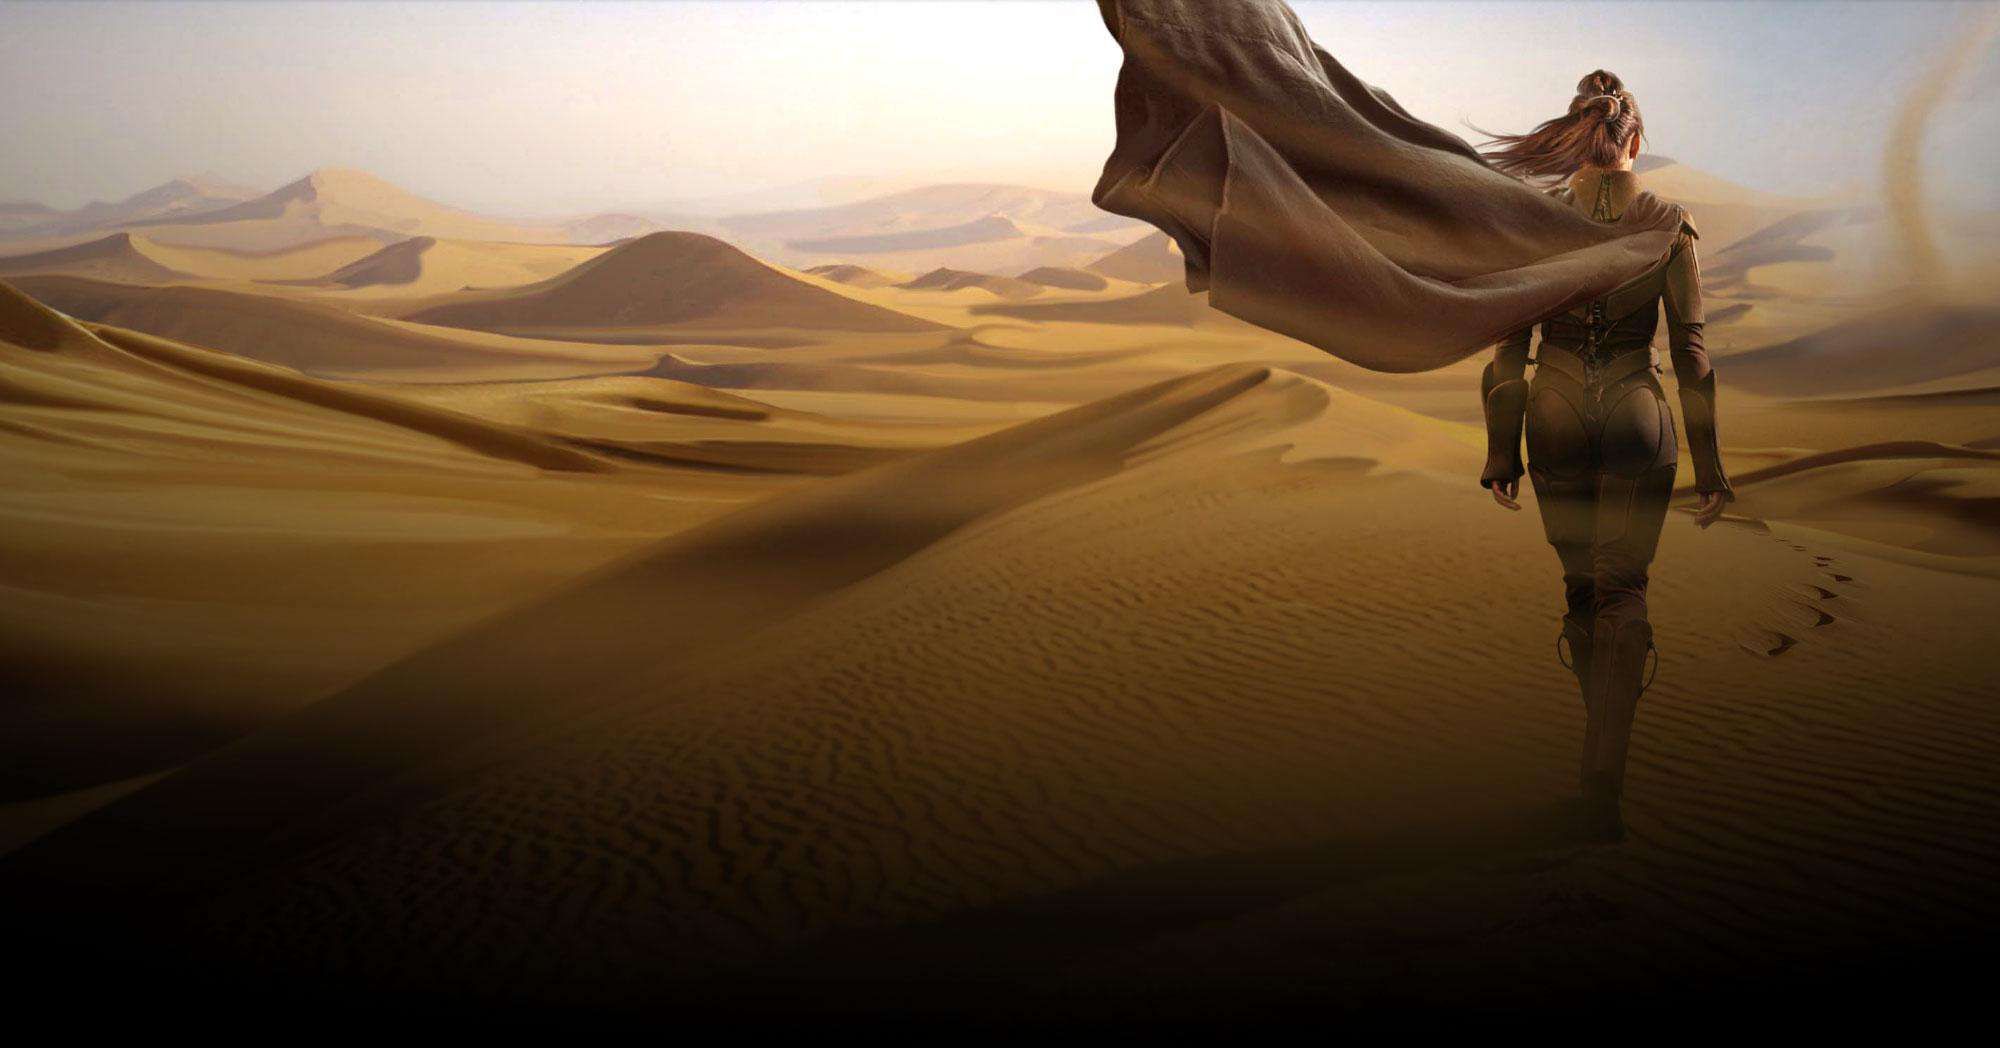 Dune movie still and teaser poster